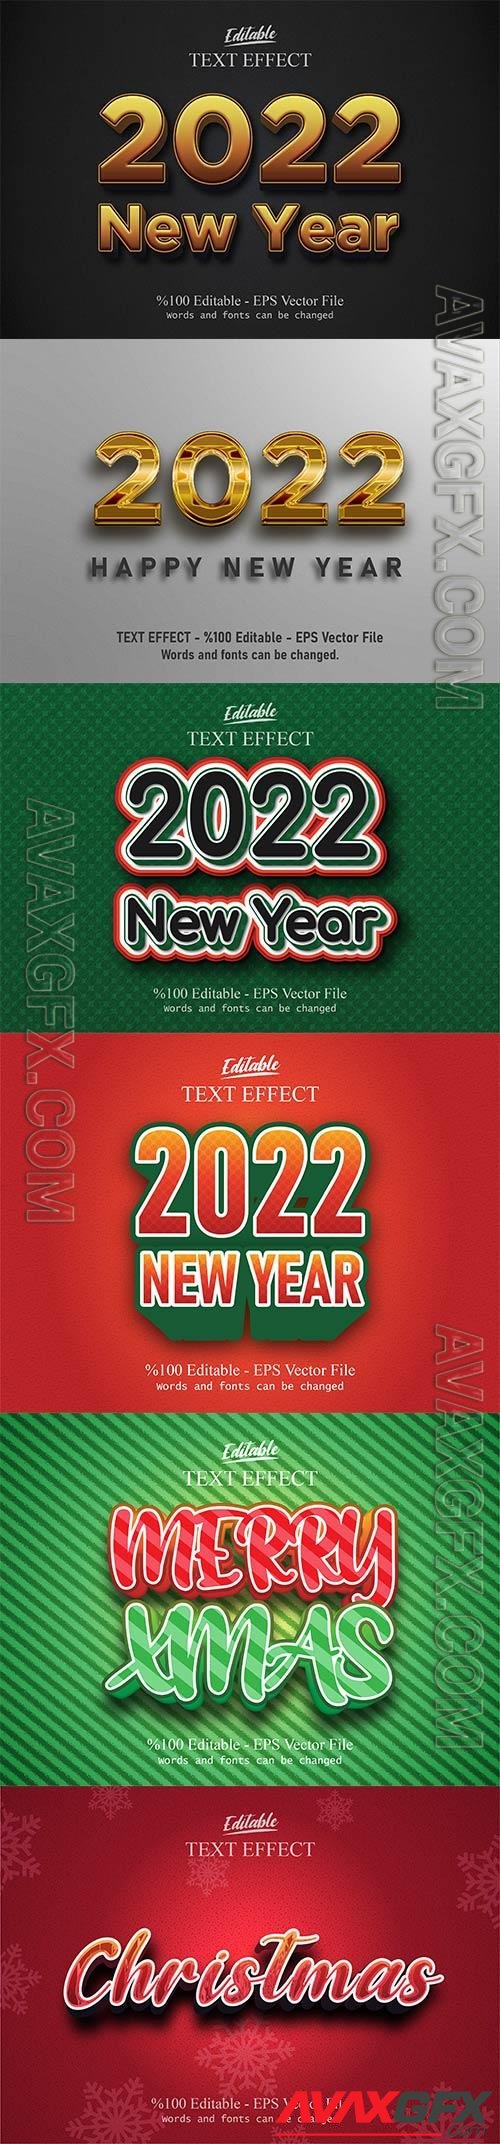 2022 New year, Merry christmas editable text effect premium vector vol 4